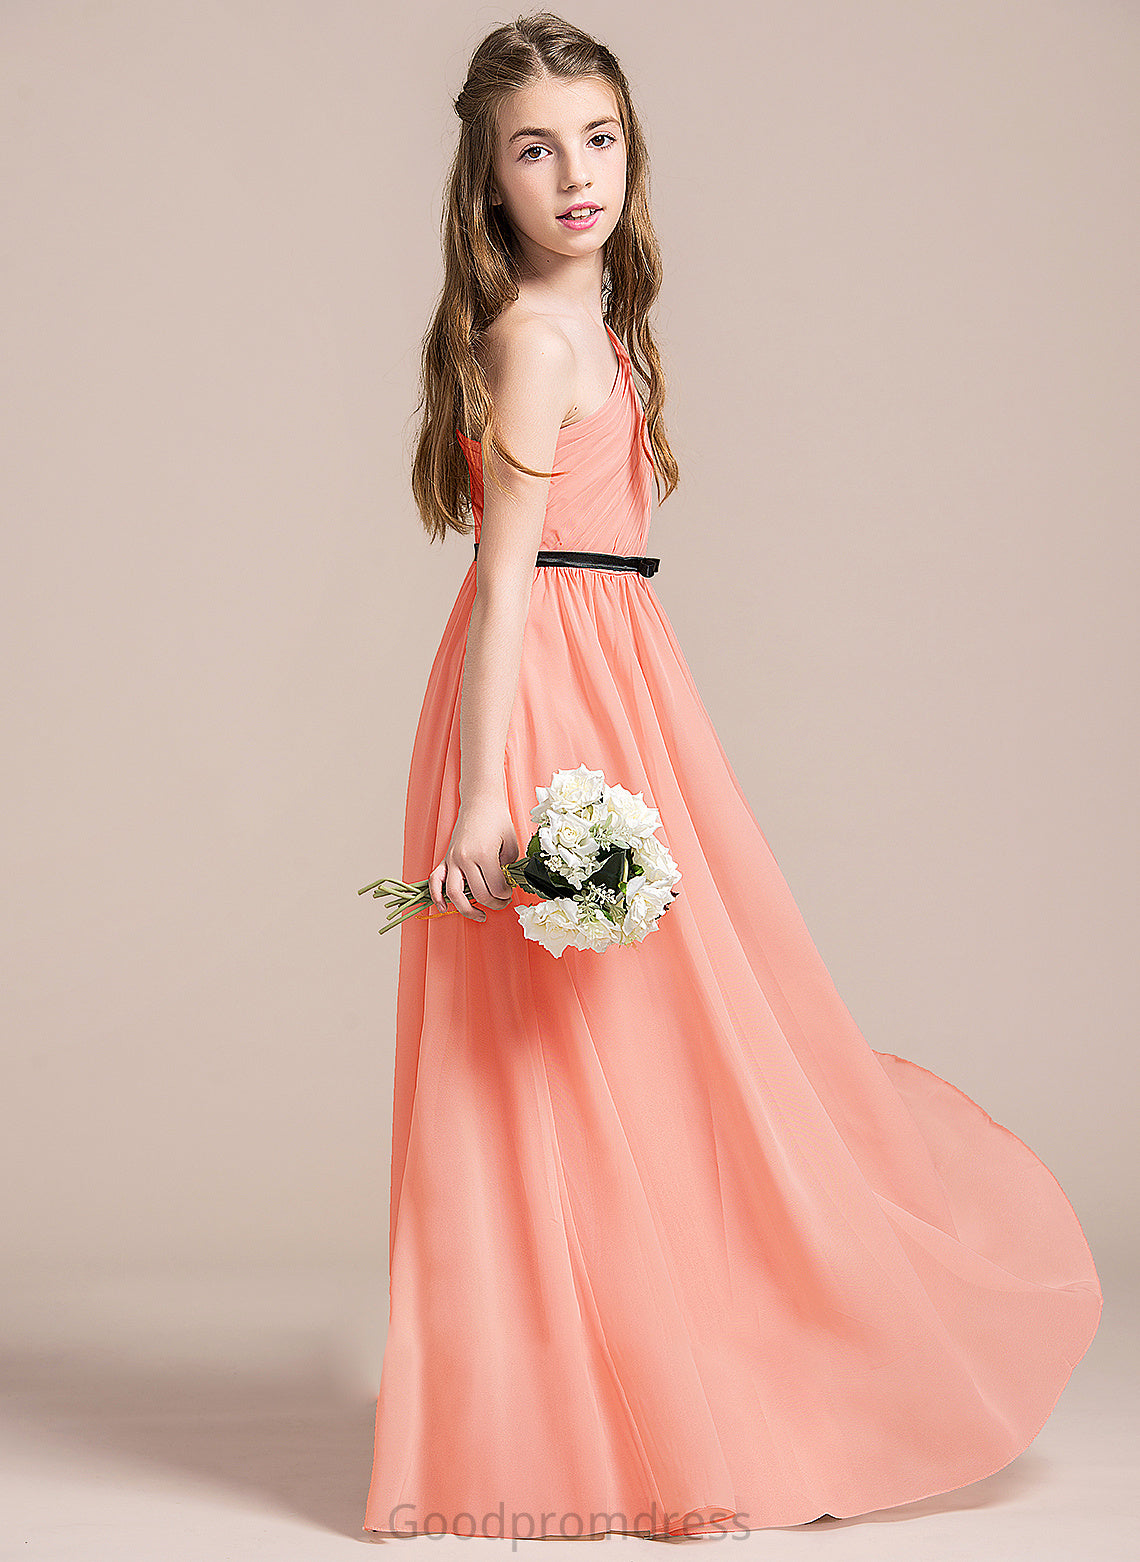 Ruffle Bow(s) Junior Bridesmaid Dresses Floor-Length A-Line Damaris Chiffon One-Shoulder With